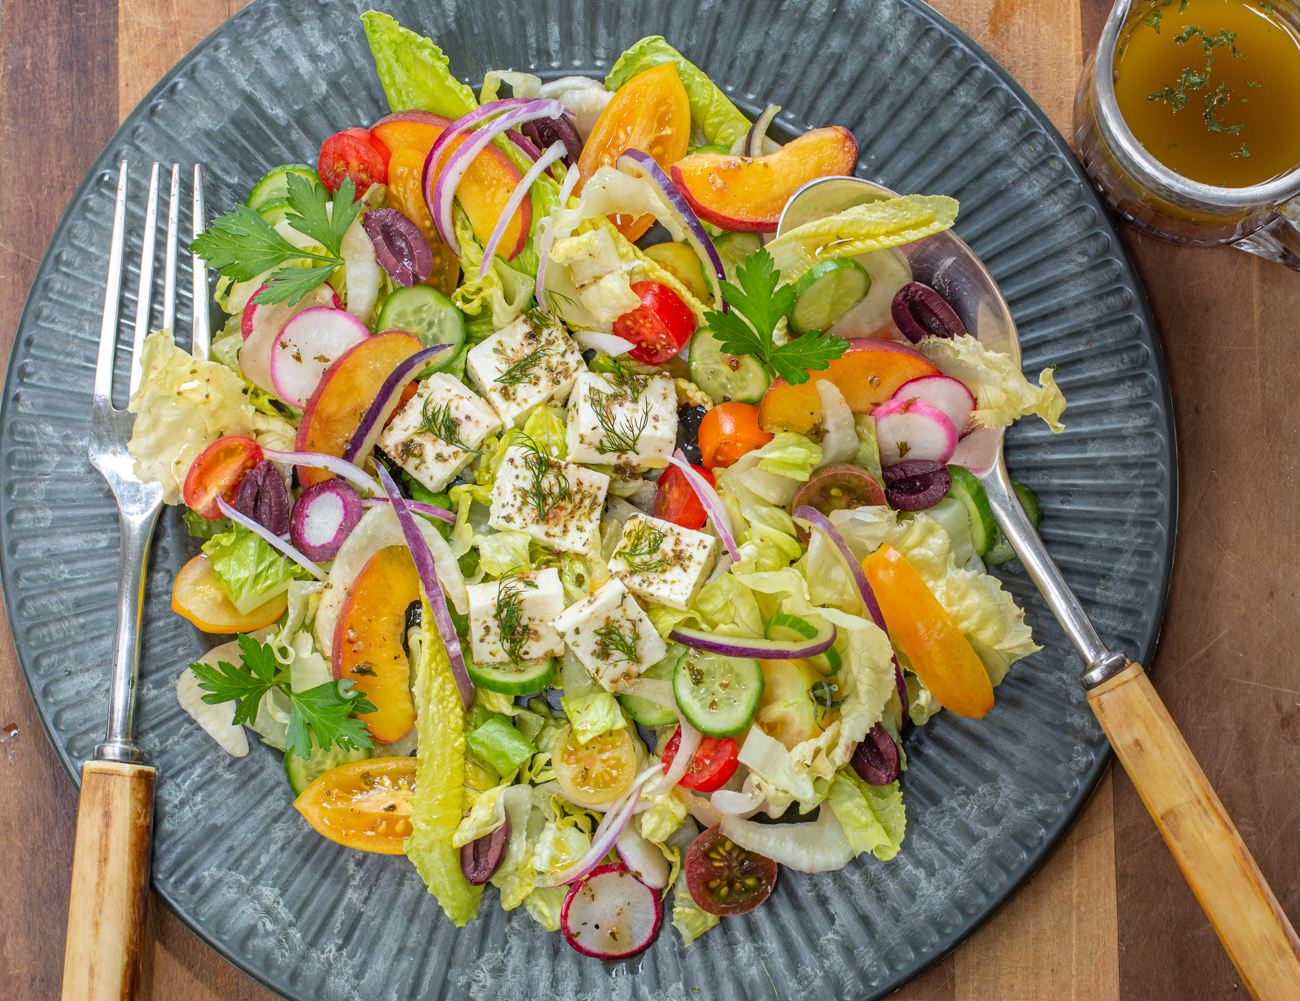 Karen's Summer Greek Salad with Peaches & Fennel with Shaken Italian Dressing